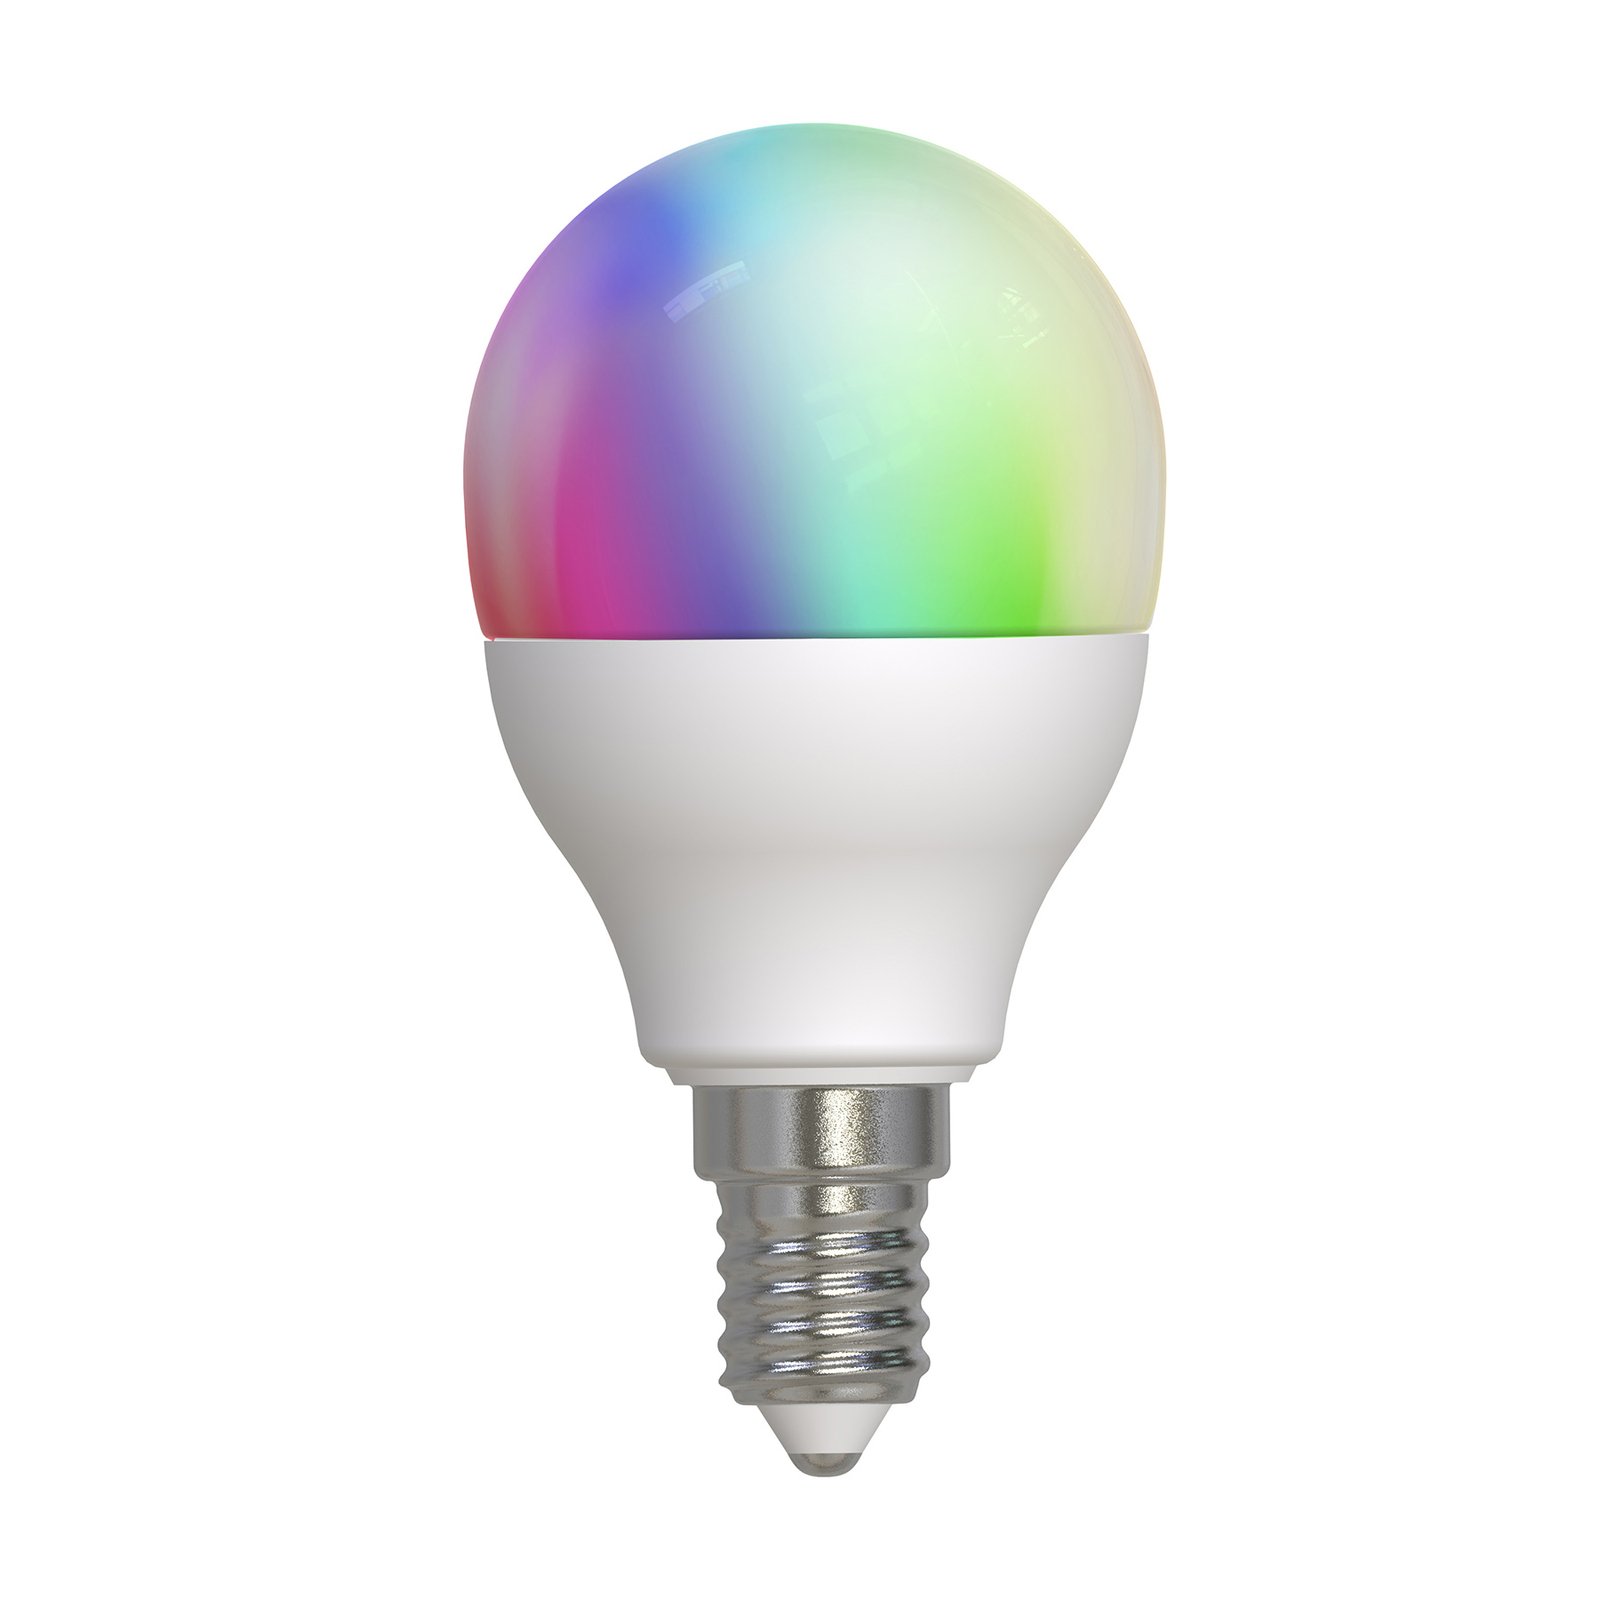 Müller Licht tint white+color LED bulb E14 4.9 W